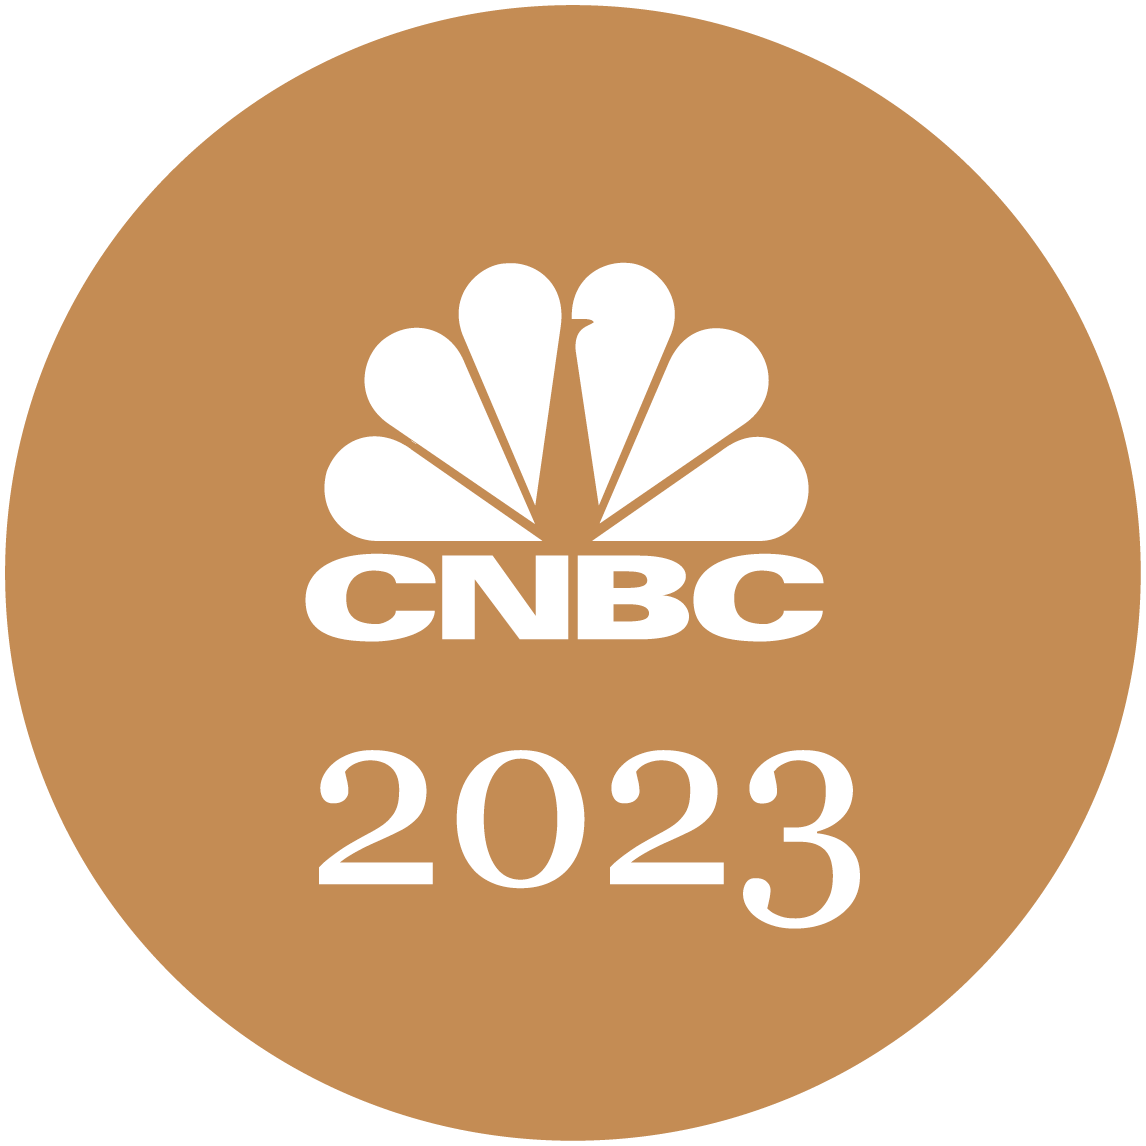 Sheaff Brock investment advisor, CNBC FA100, top rated financial advisor 2023